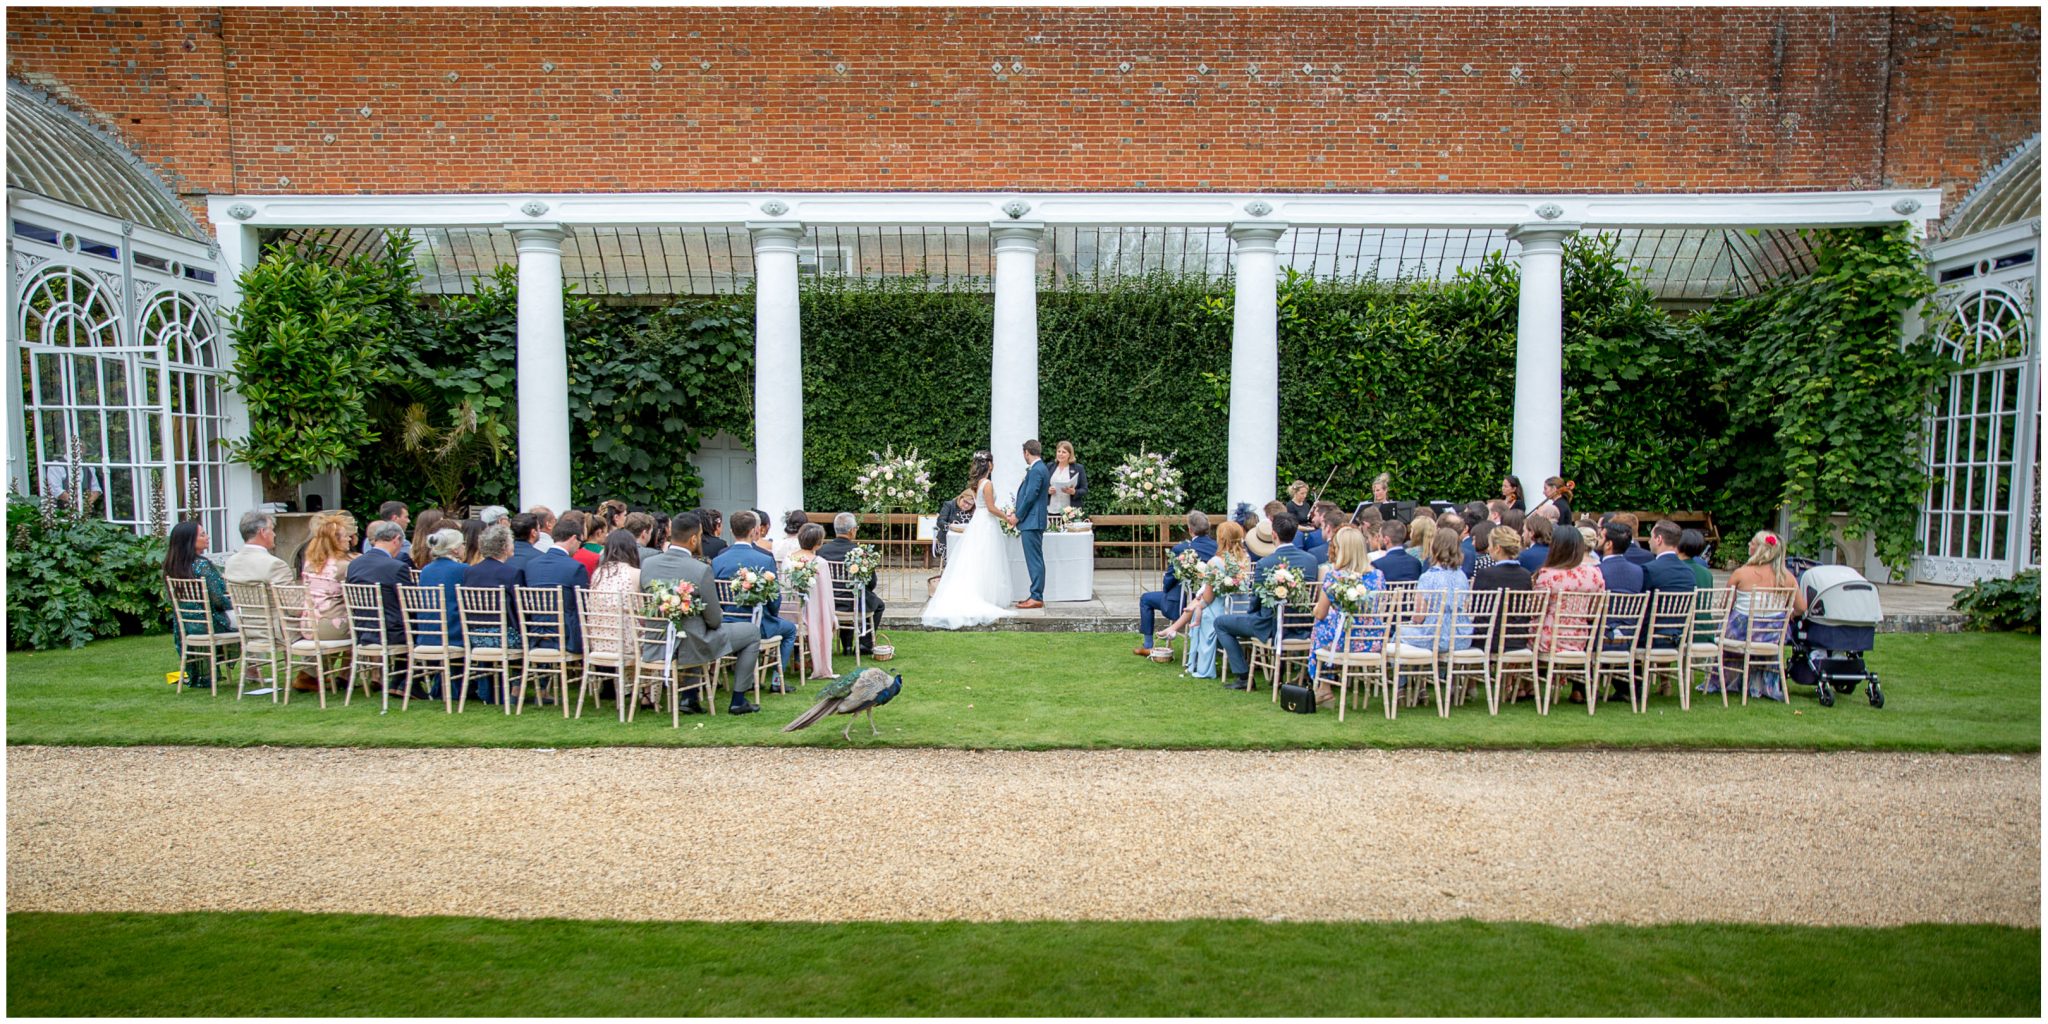 Outdoor wedding ceremony at Avington Park